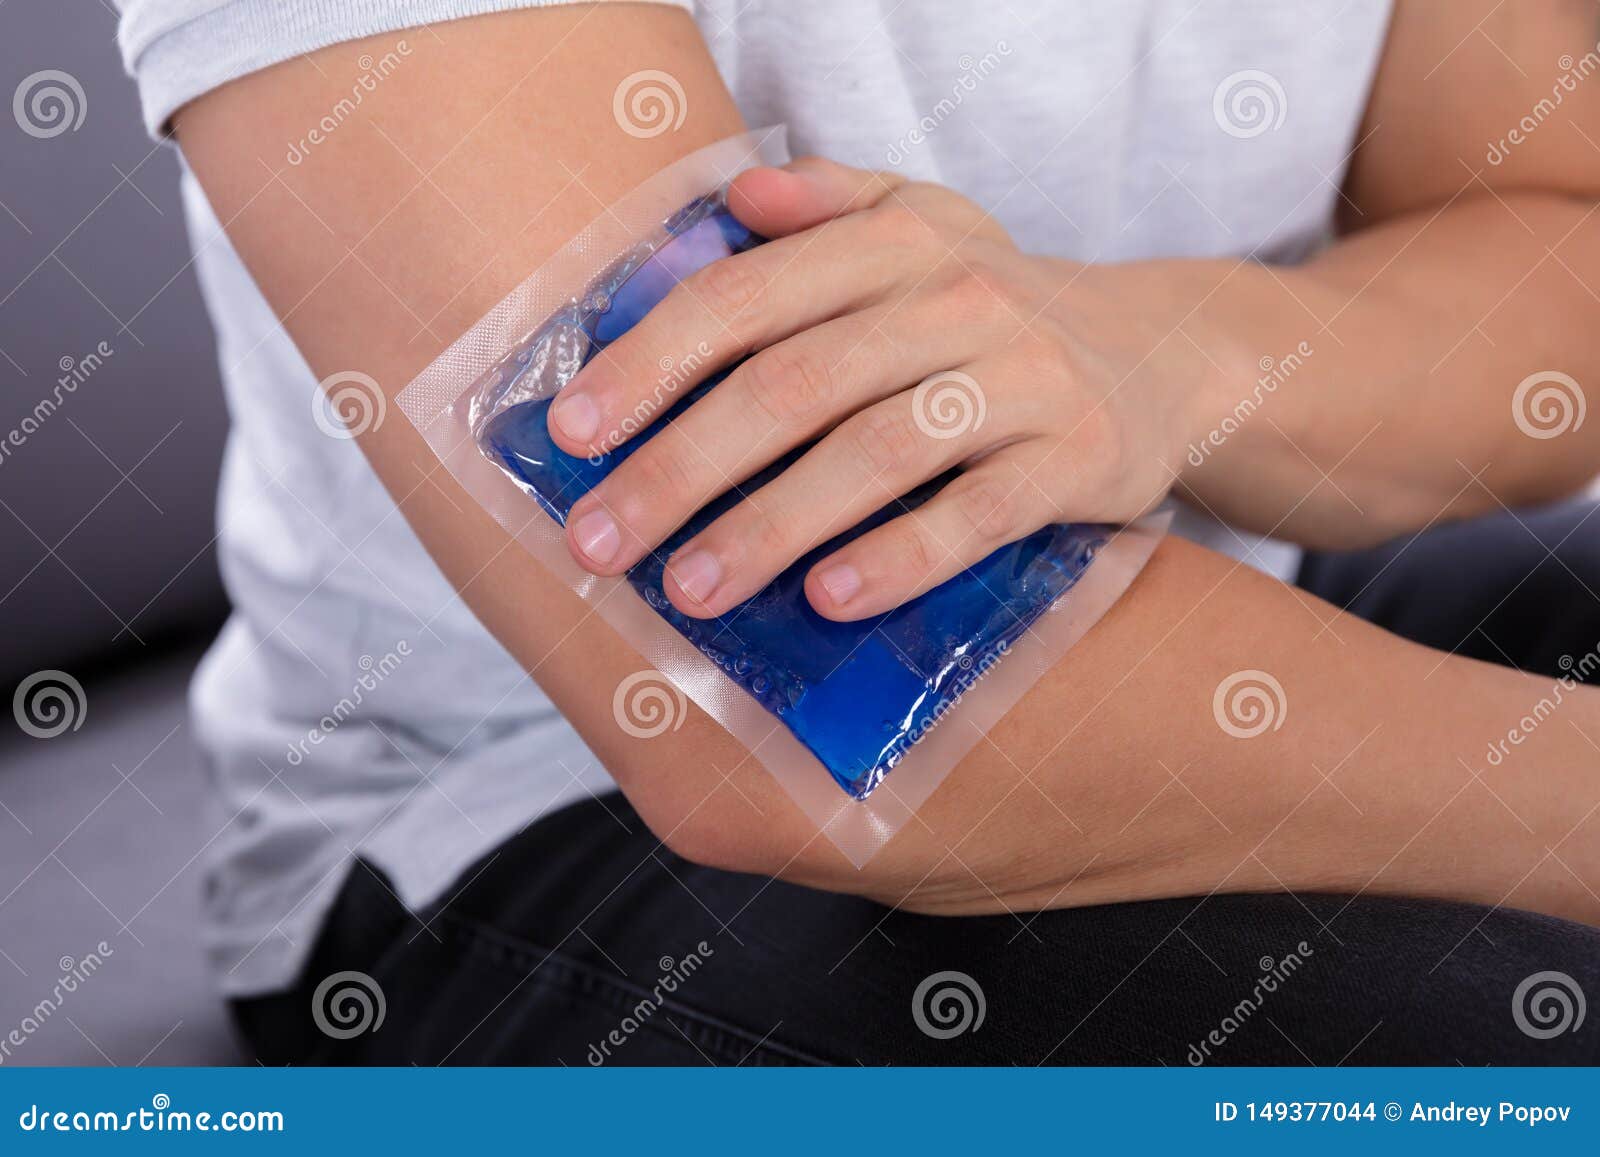 man applying ice gel pack on an injured elbow